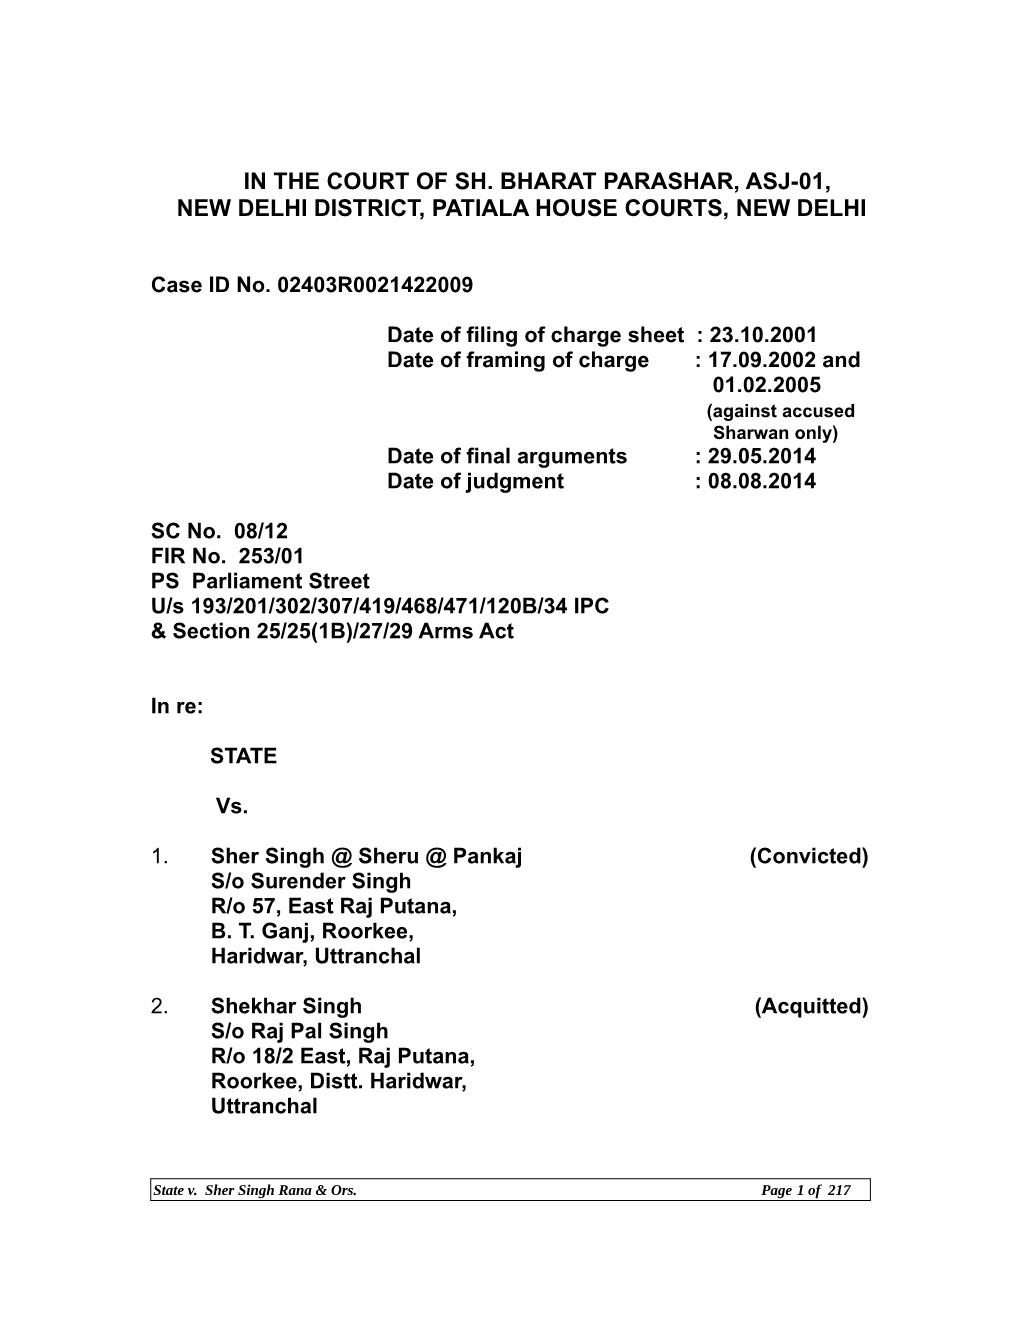 In the Court of Sh. Bharat Parashar, Asj-01, New Delhi District, Patiala House Courts, New Delhi